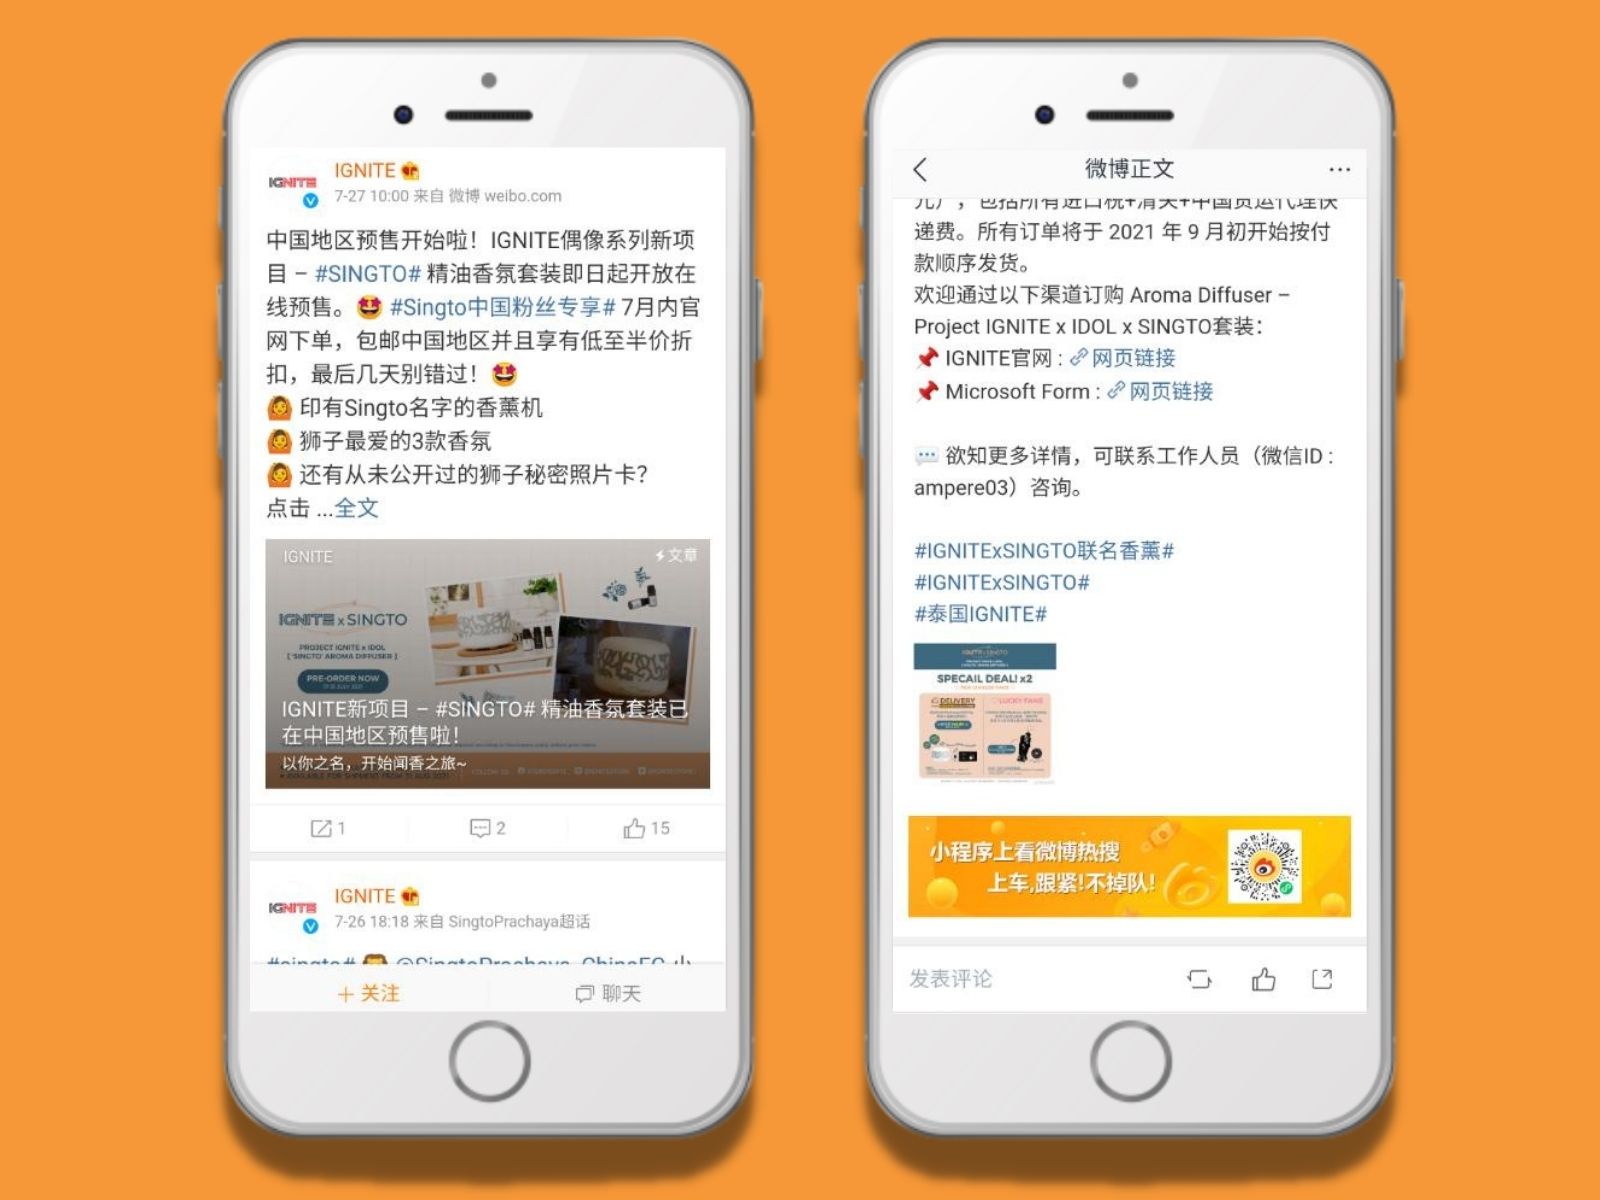 Screenshots of IGNITE’s Ads on Weibo 